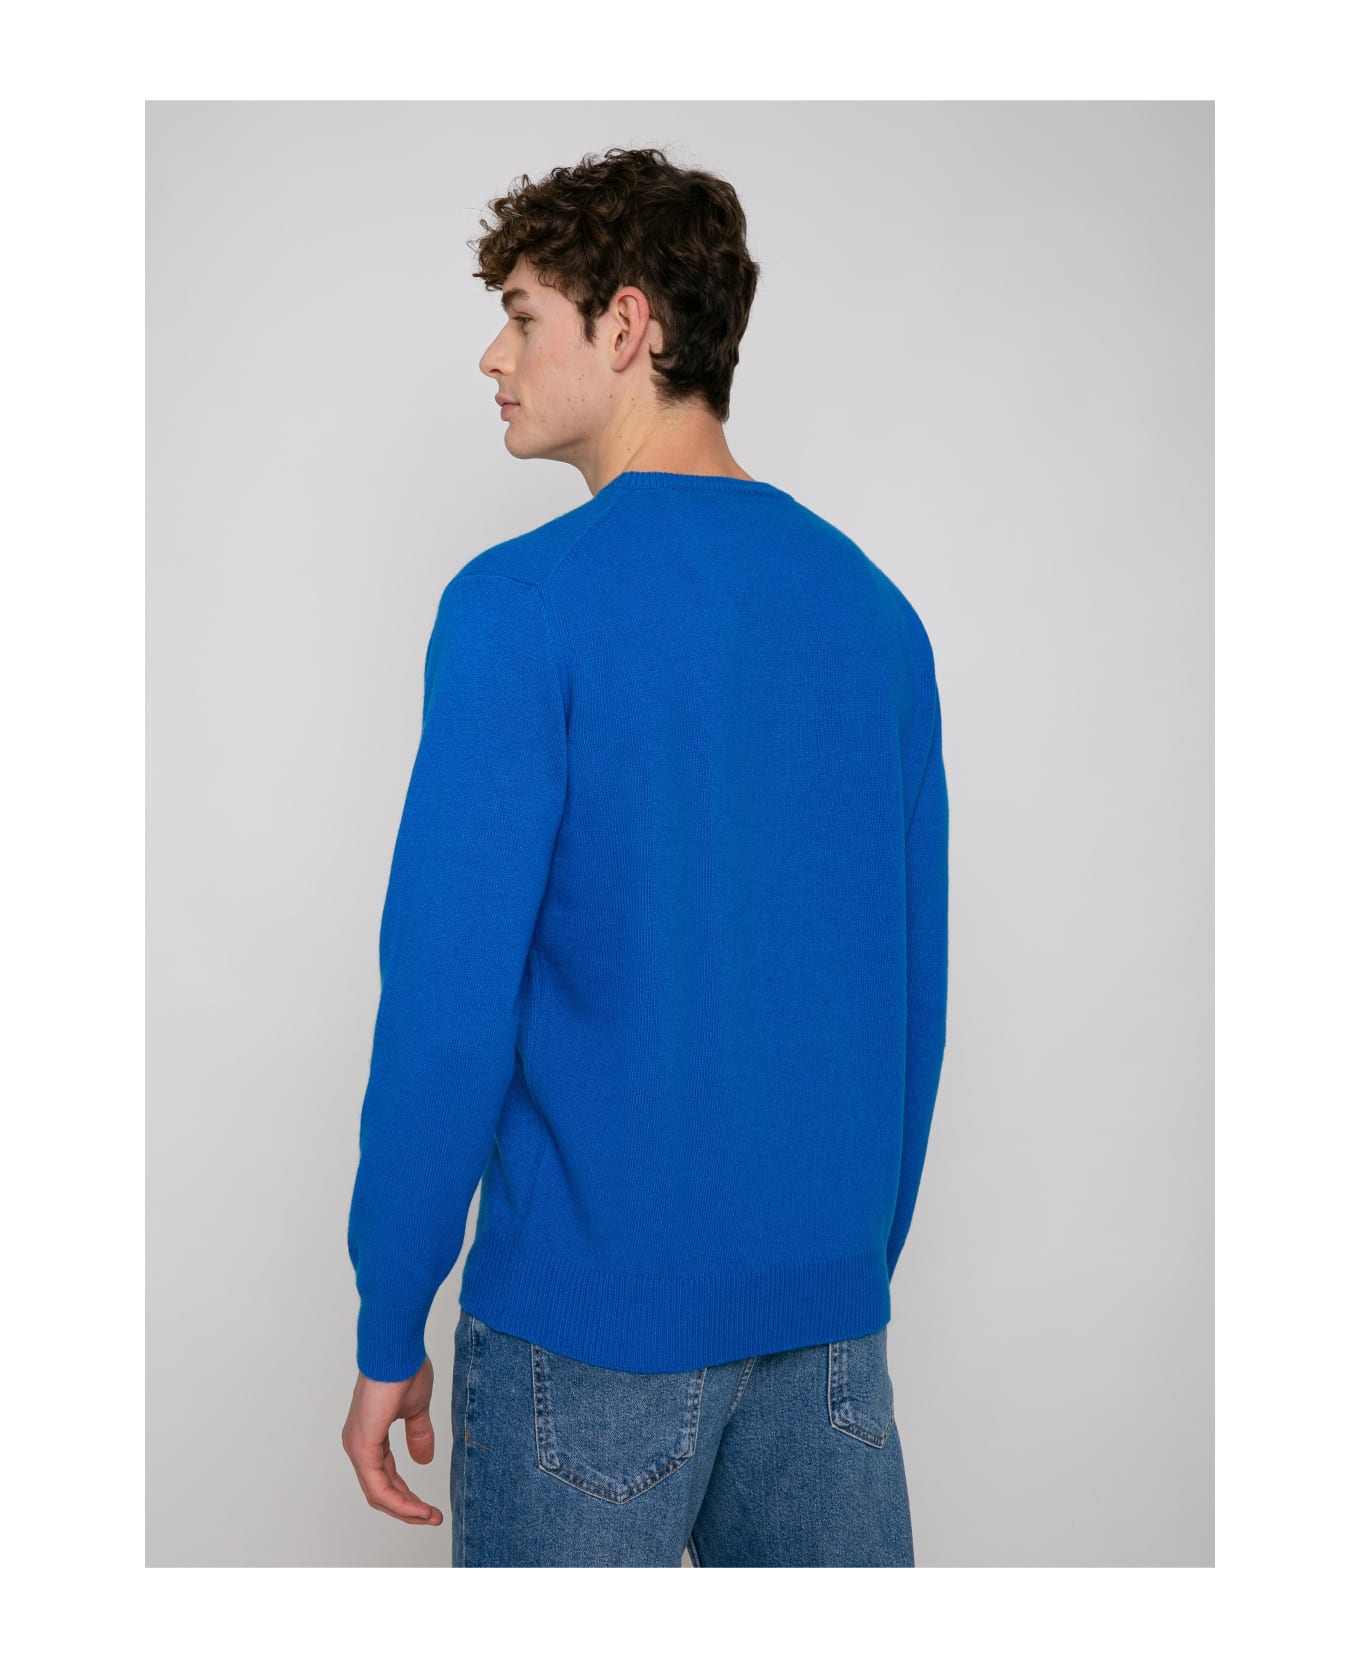 MC2 Saint Barth Man Sweater With Milano Padel Club Jacquard Print - BLUE